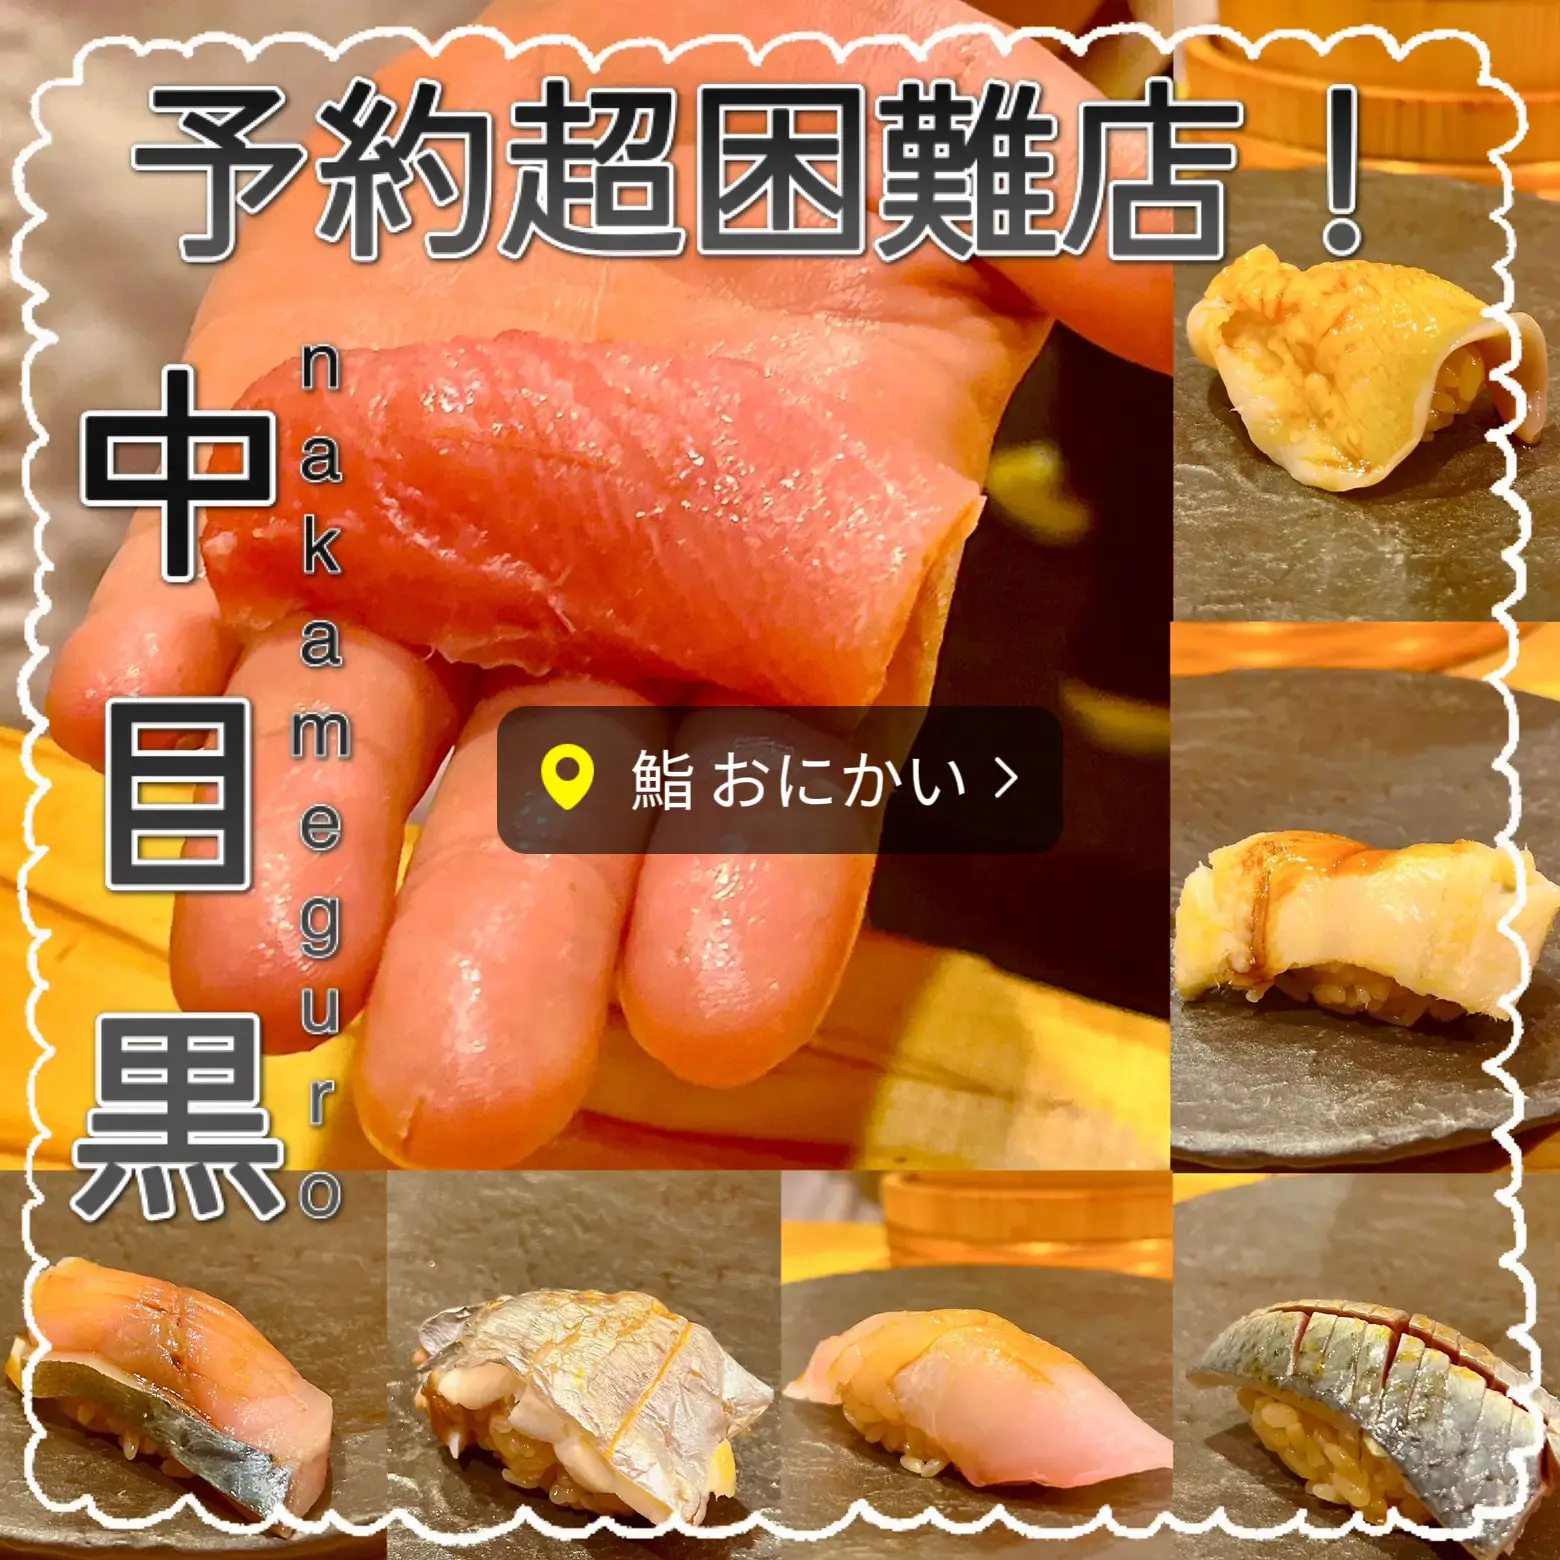 Popin Cookin Sushi – OMG Japan